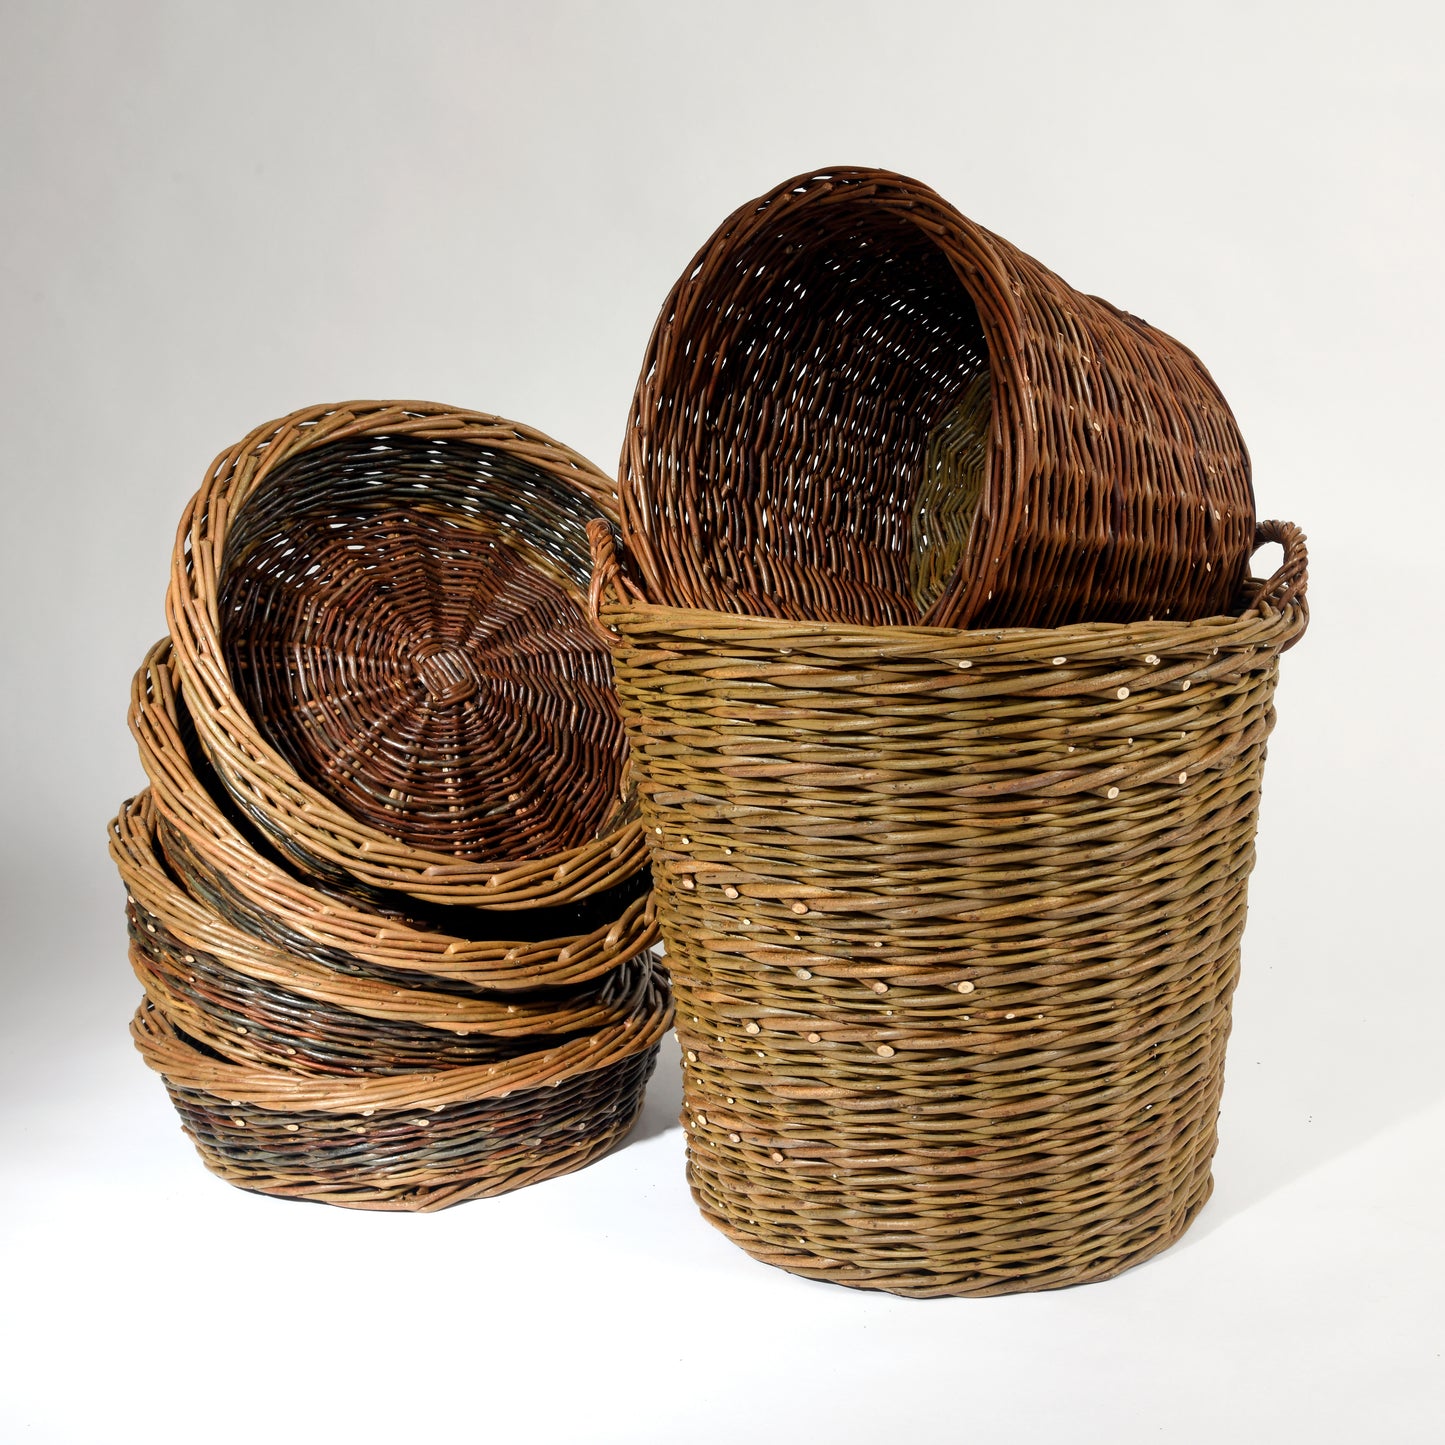 Handmade willow baskets